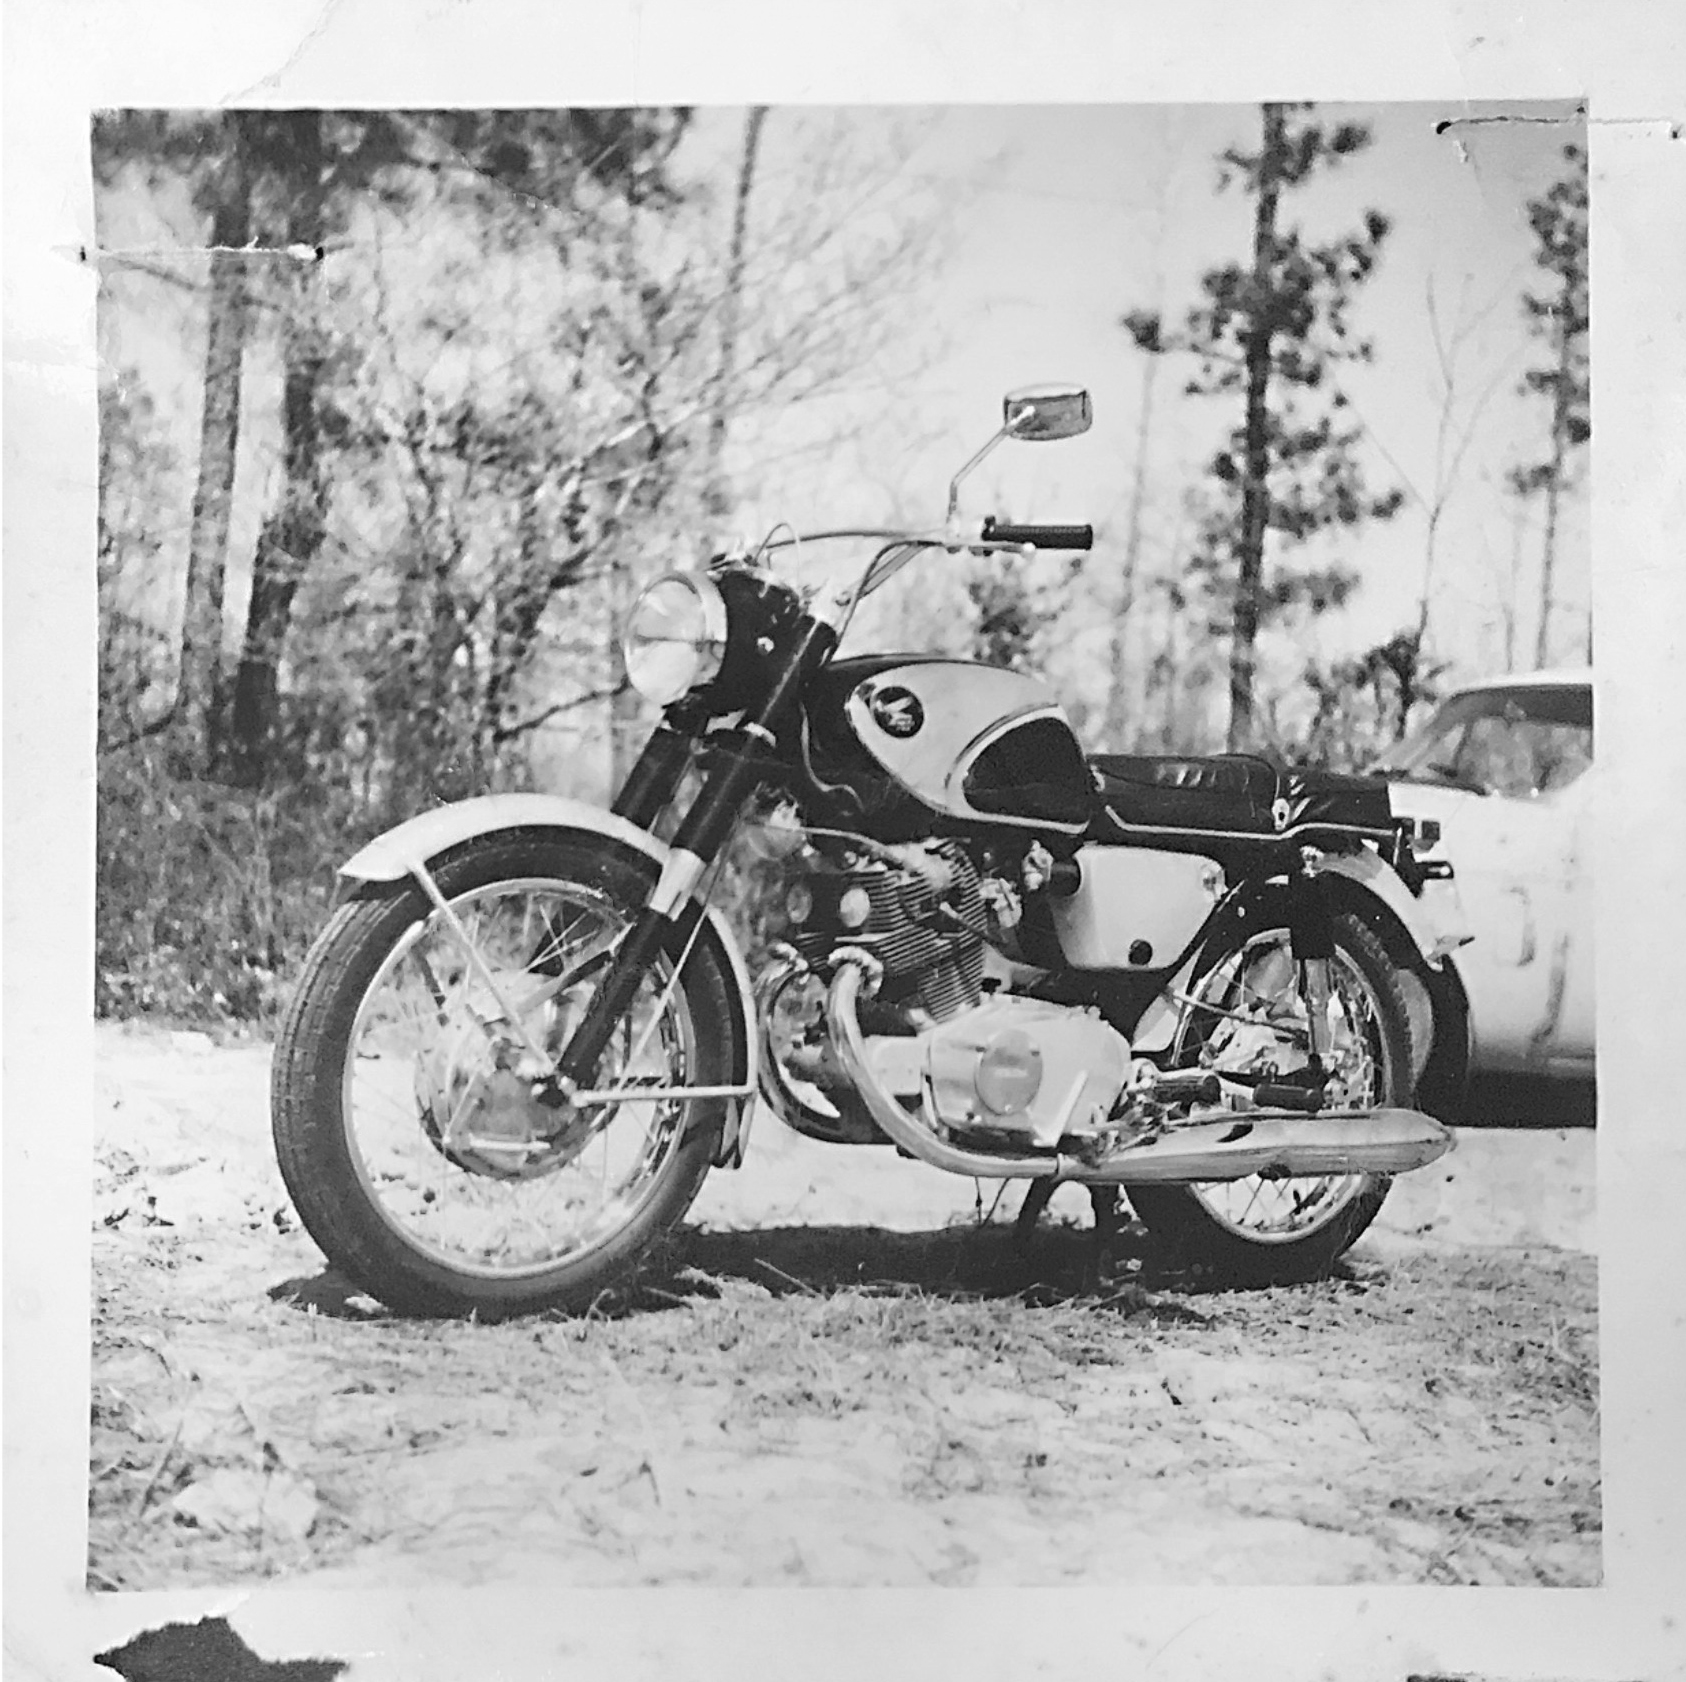 Black and white photo of Honda Super Hawk motorcycle